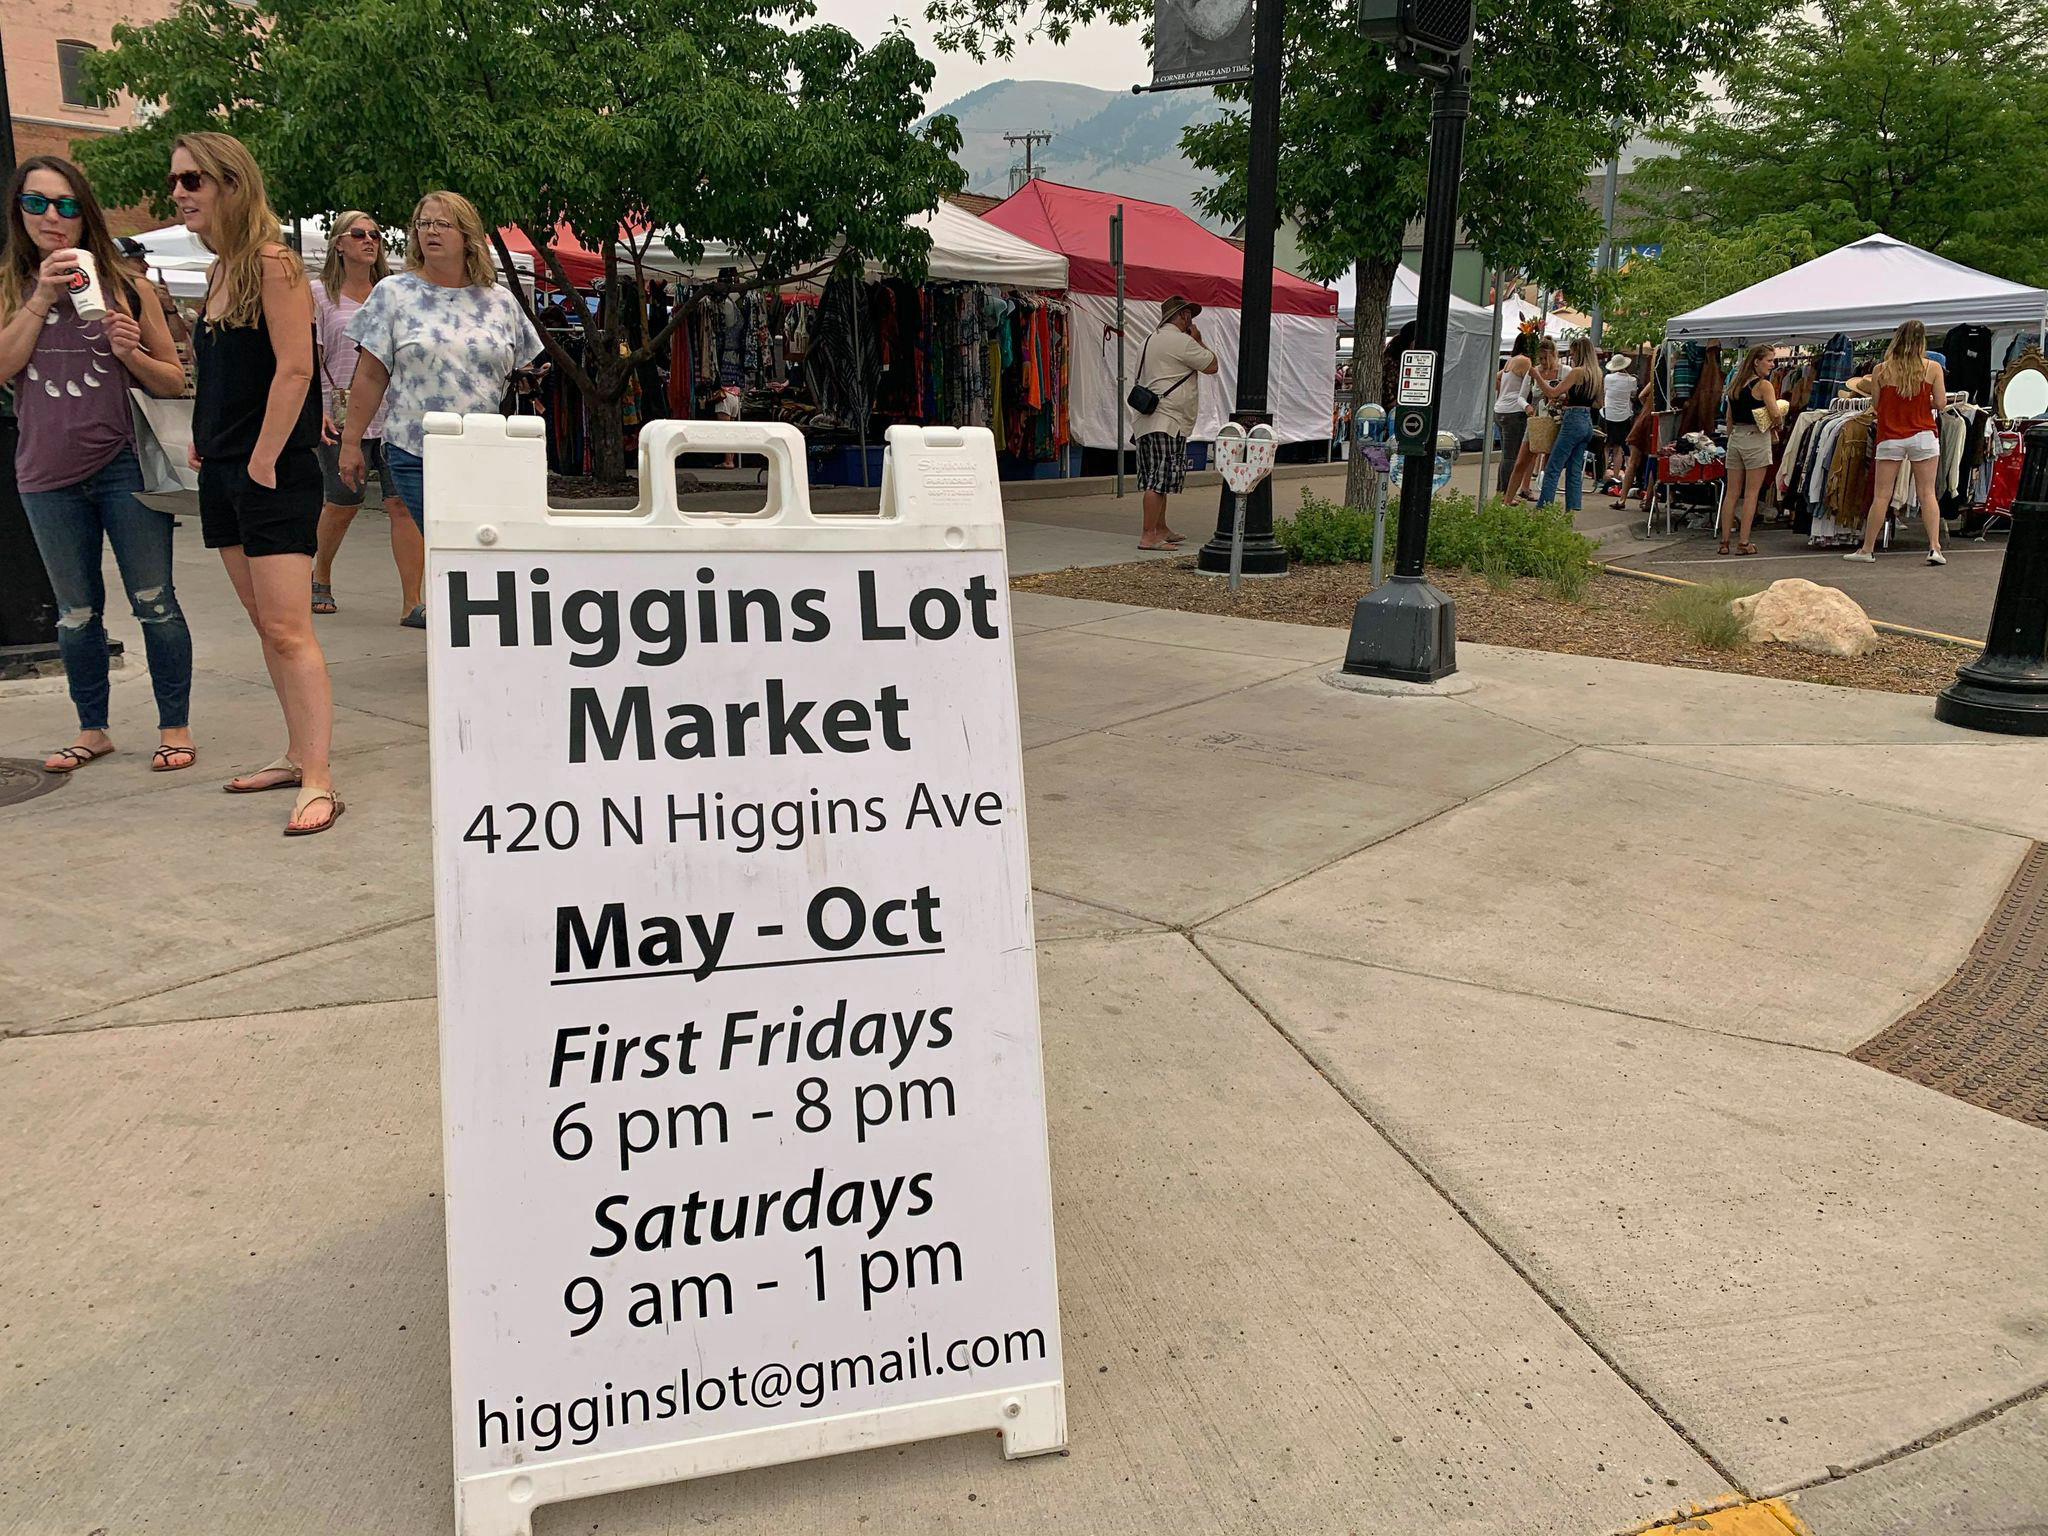 Higgins Lot Alternative Market in Downtown Missoula, Montana